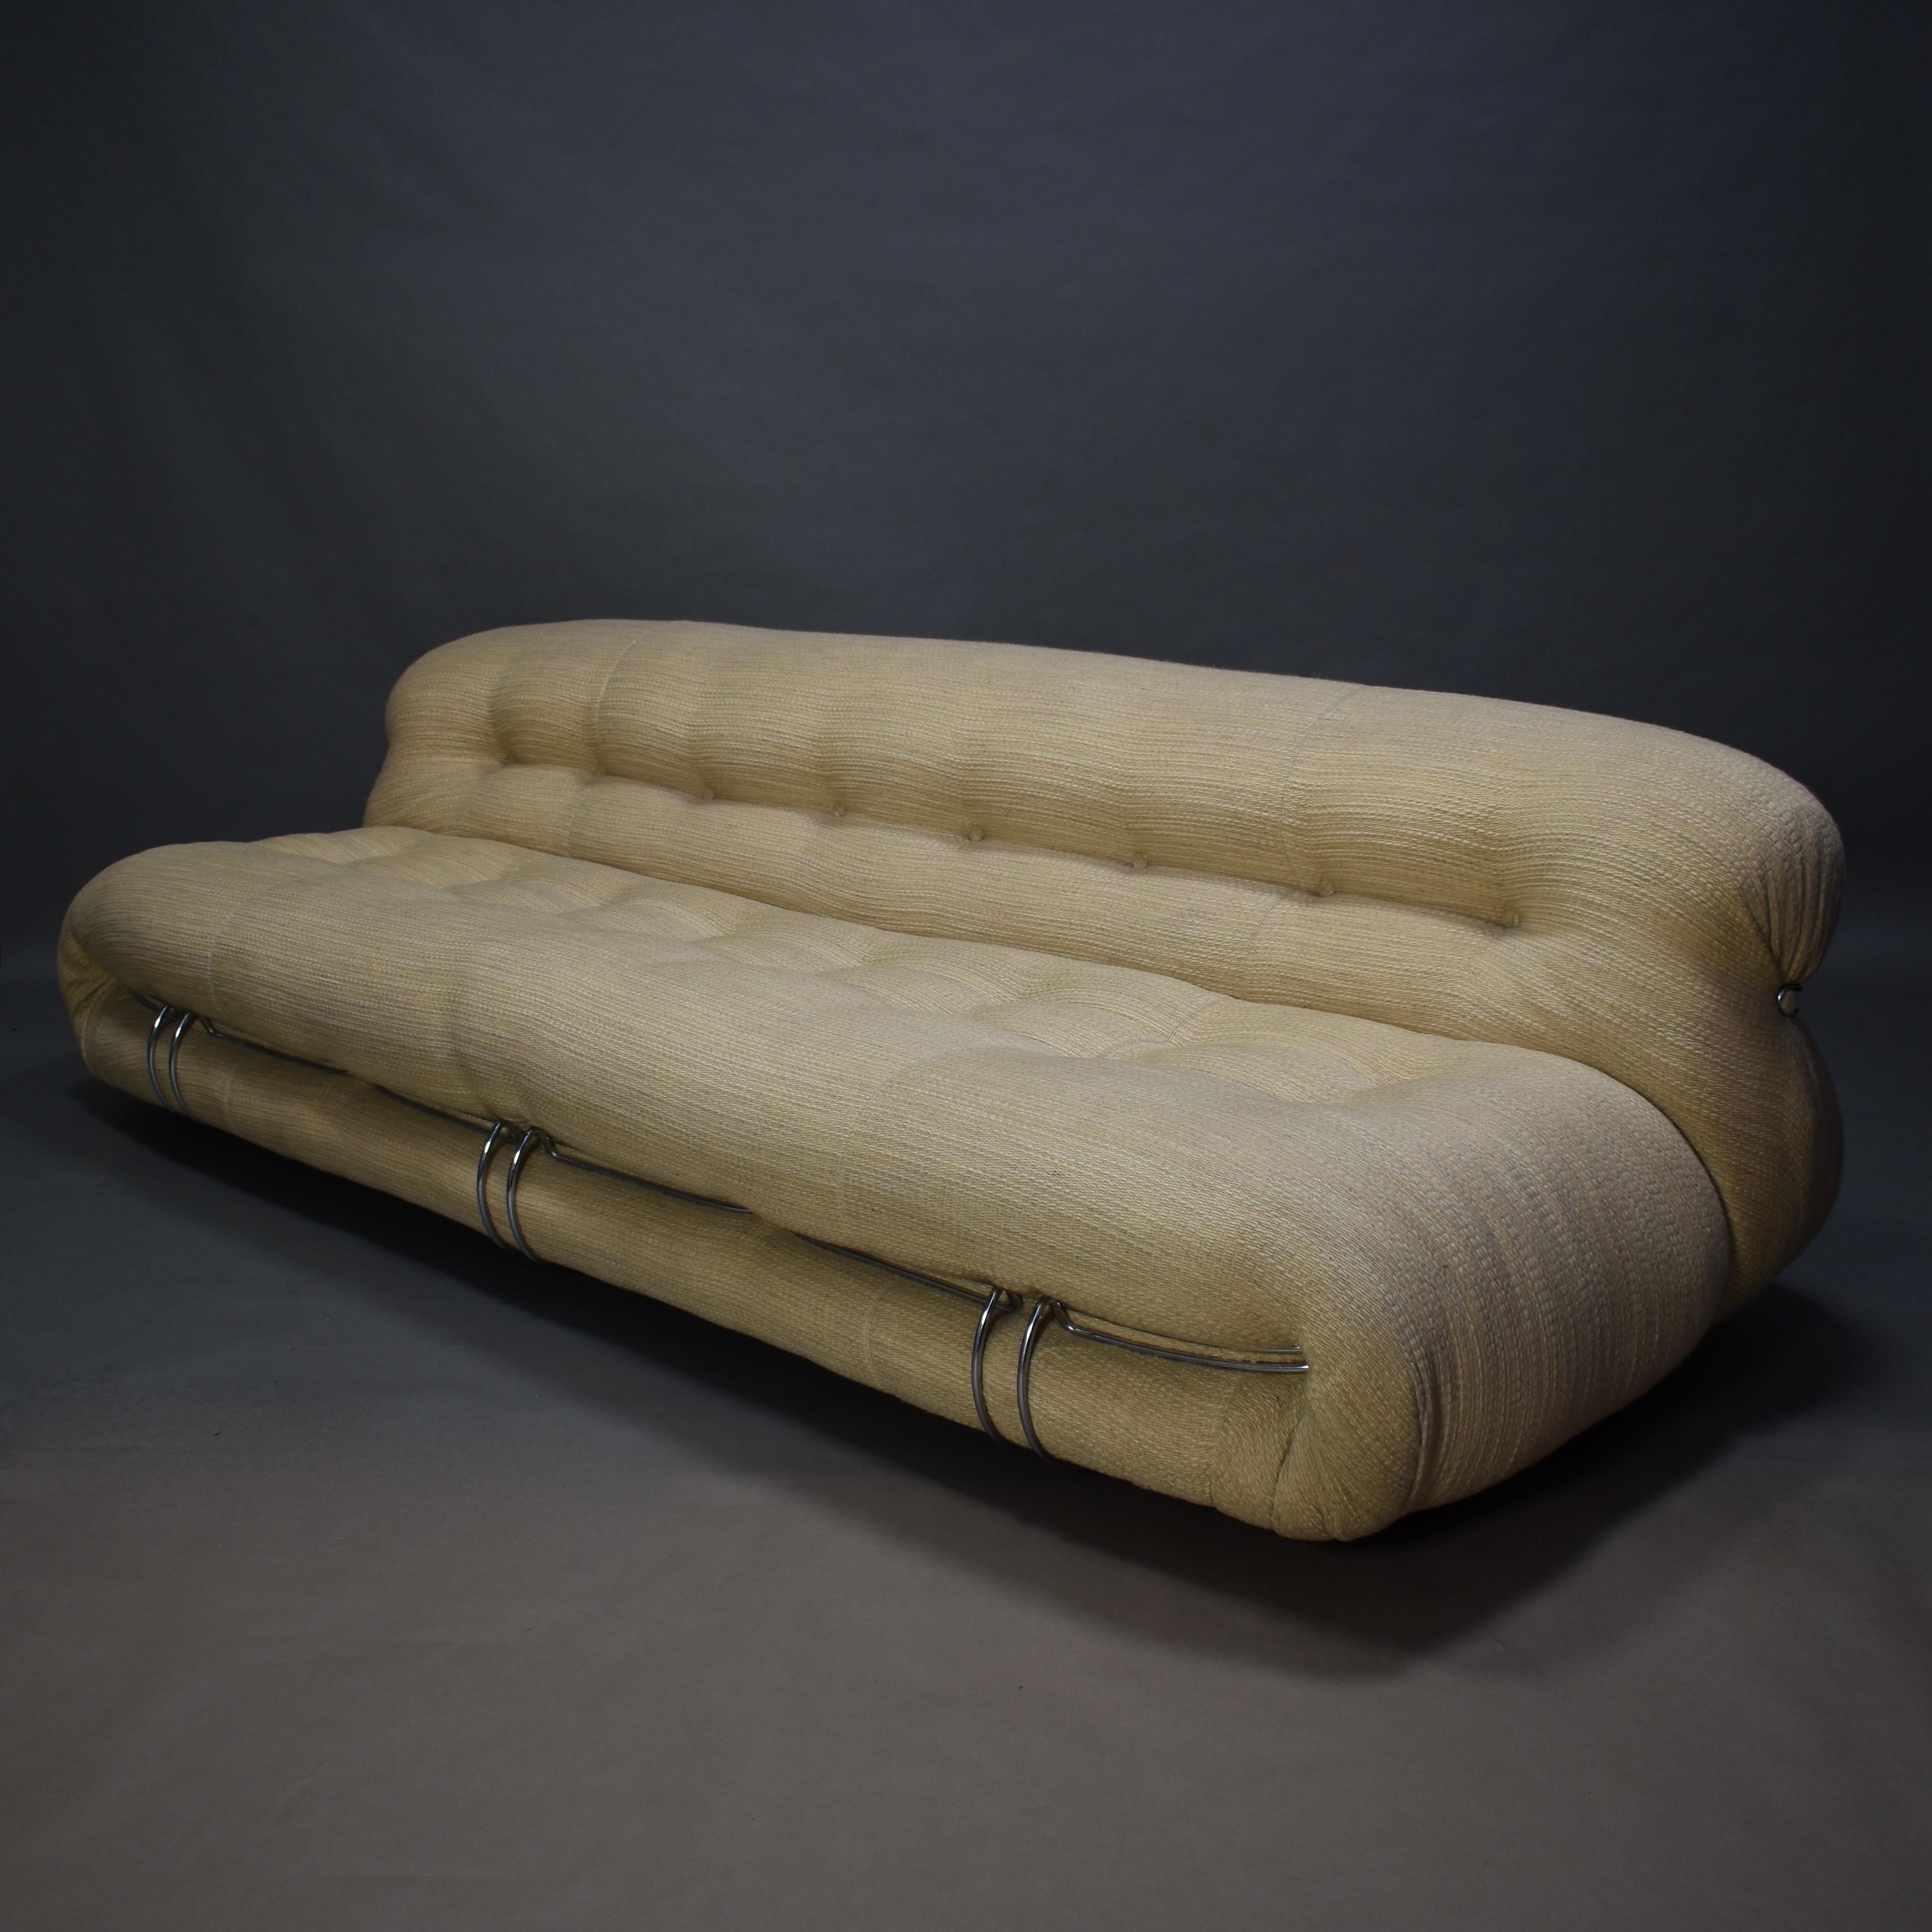 Large Soriana sofa by Afra and Tobia Scarpa for Cassina, Italy, circa 1970.
The sofa still has the original fabric.

Designer: Afra & Tobia Scarpa

Manufacturer: Cassina

Country: Italy

Model: Soriana sofa

Design period: circa